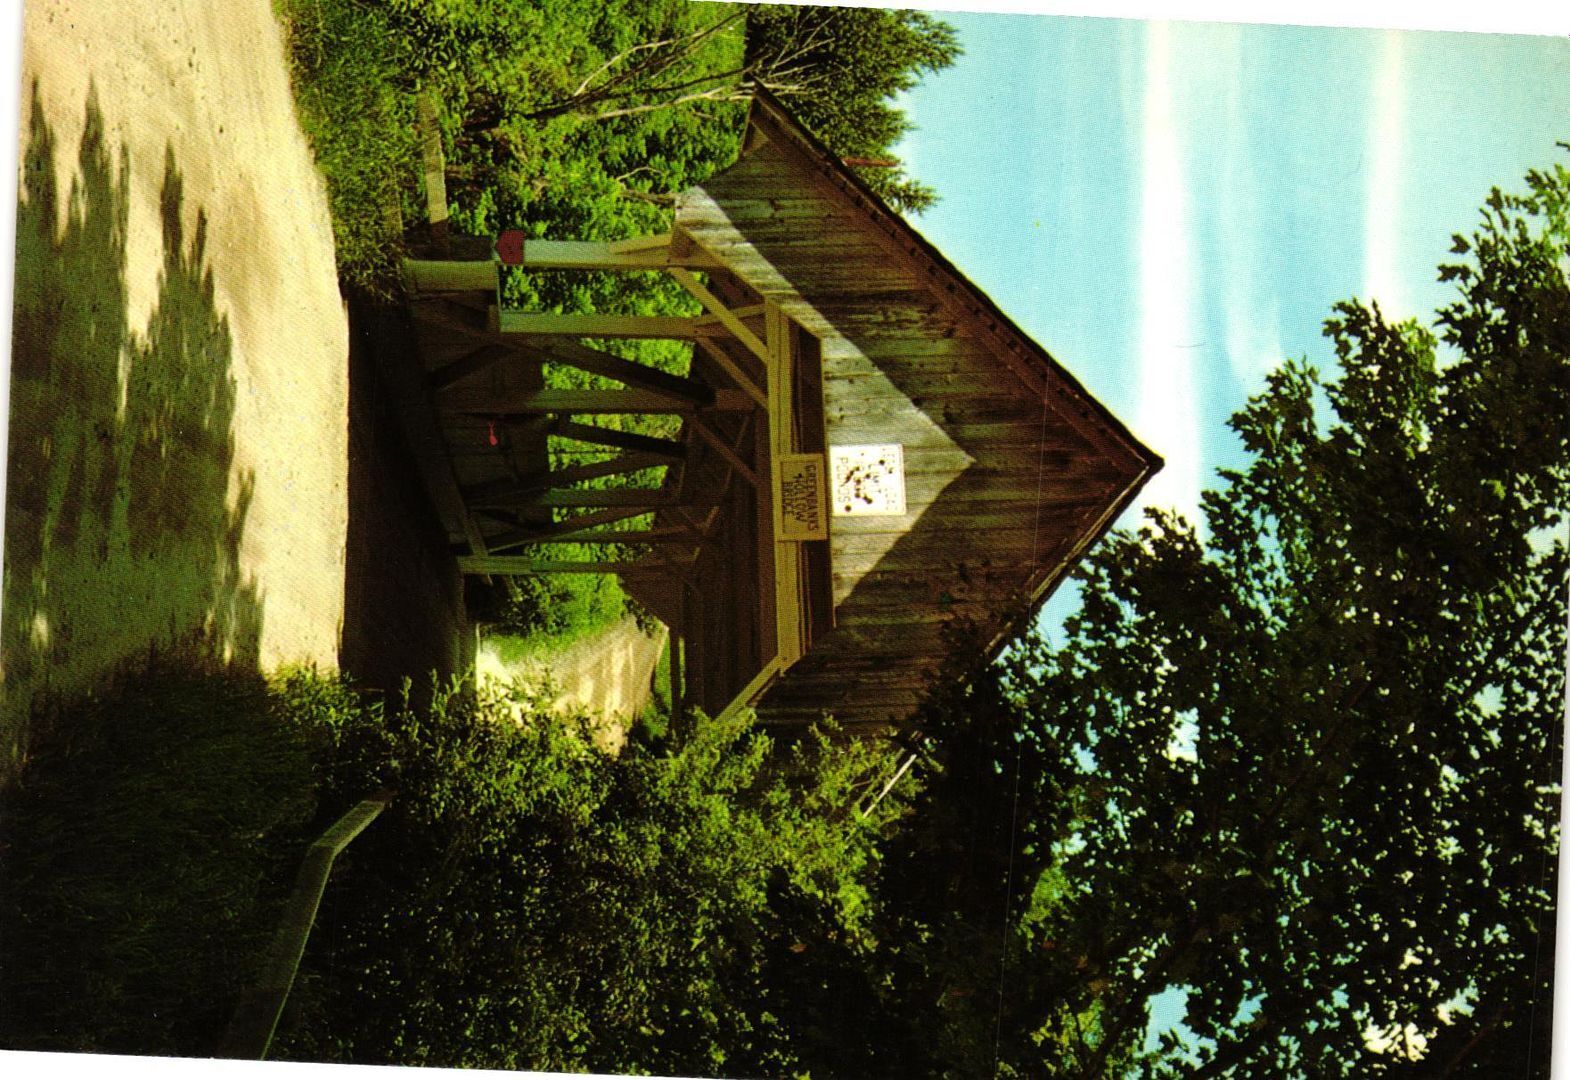 Vintage Postcard 4x6- GREENBANKS HOLLOW COVERED BRIDGE, DANVILLE, VT.